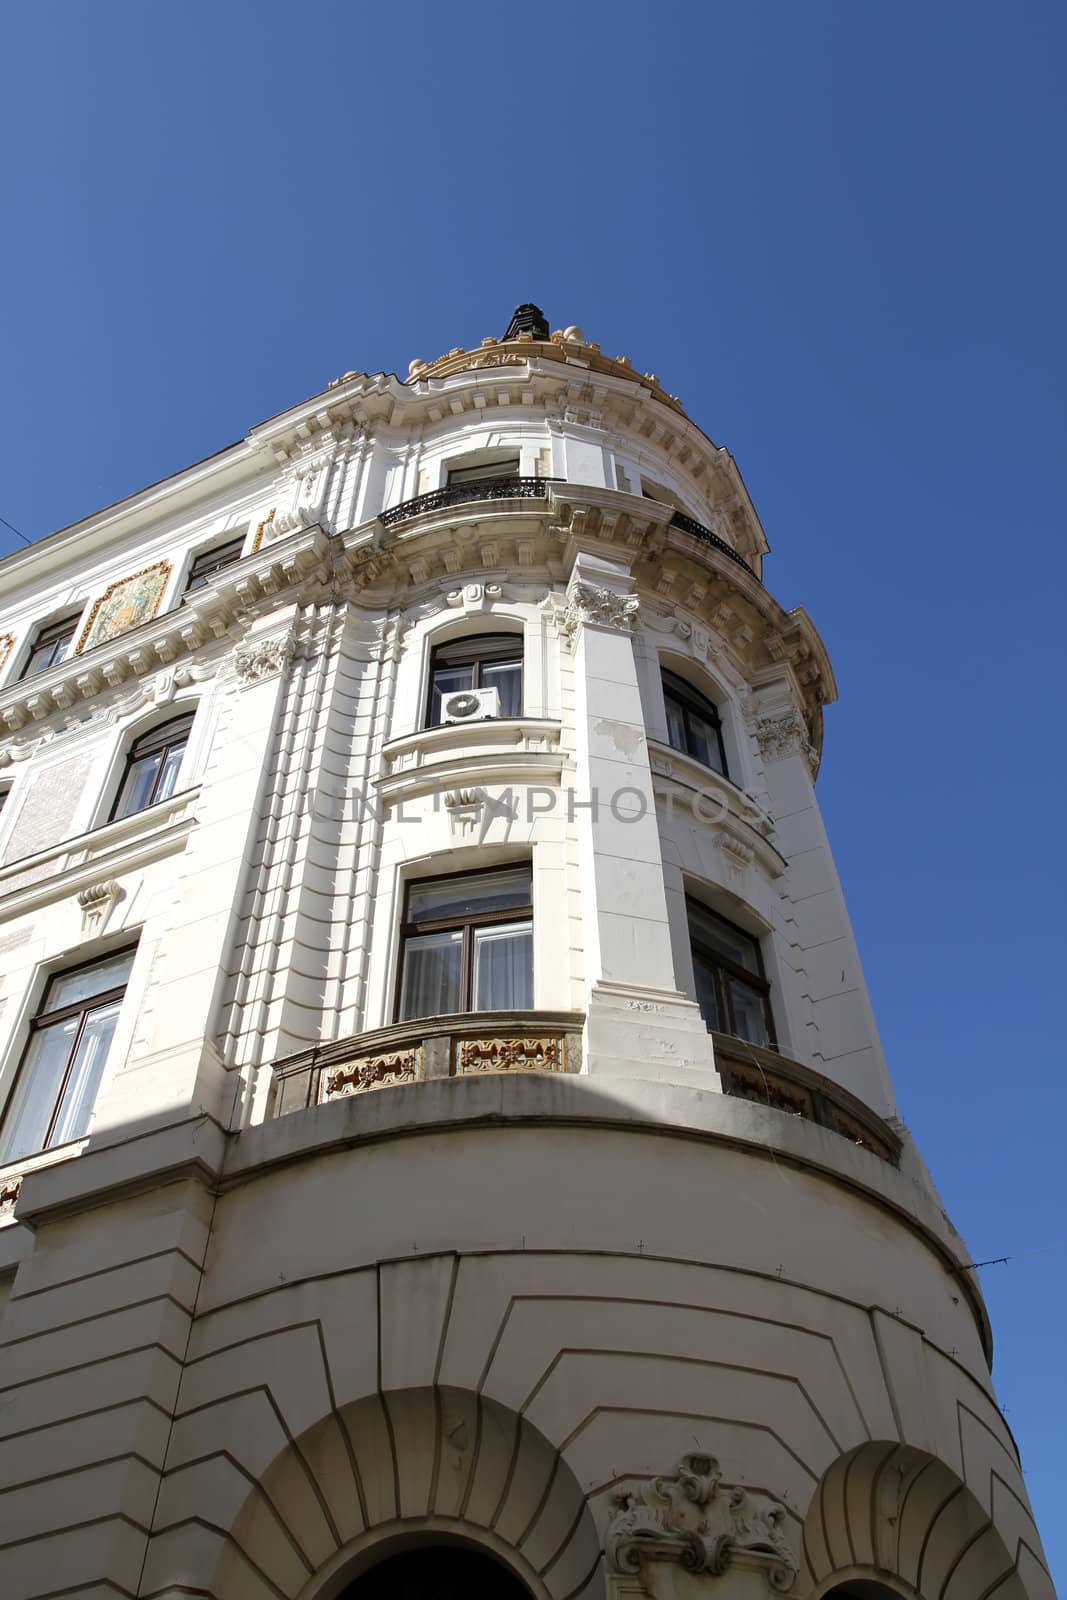 Digital Photo of historic building in Pecs, Hungary.